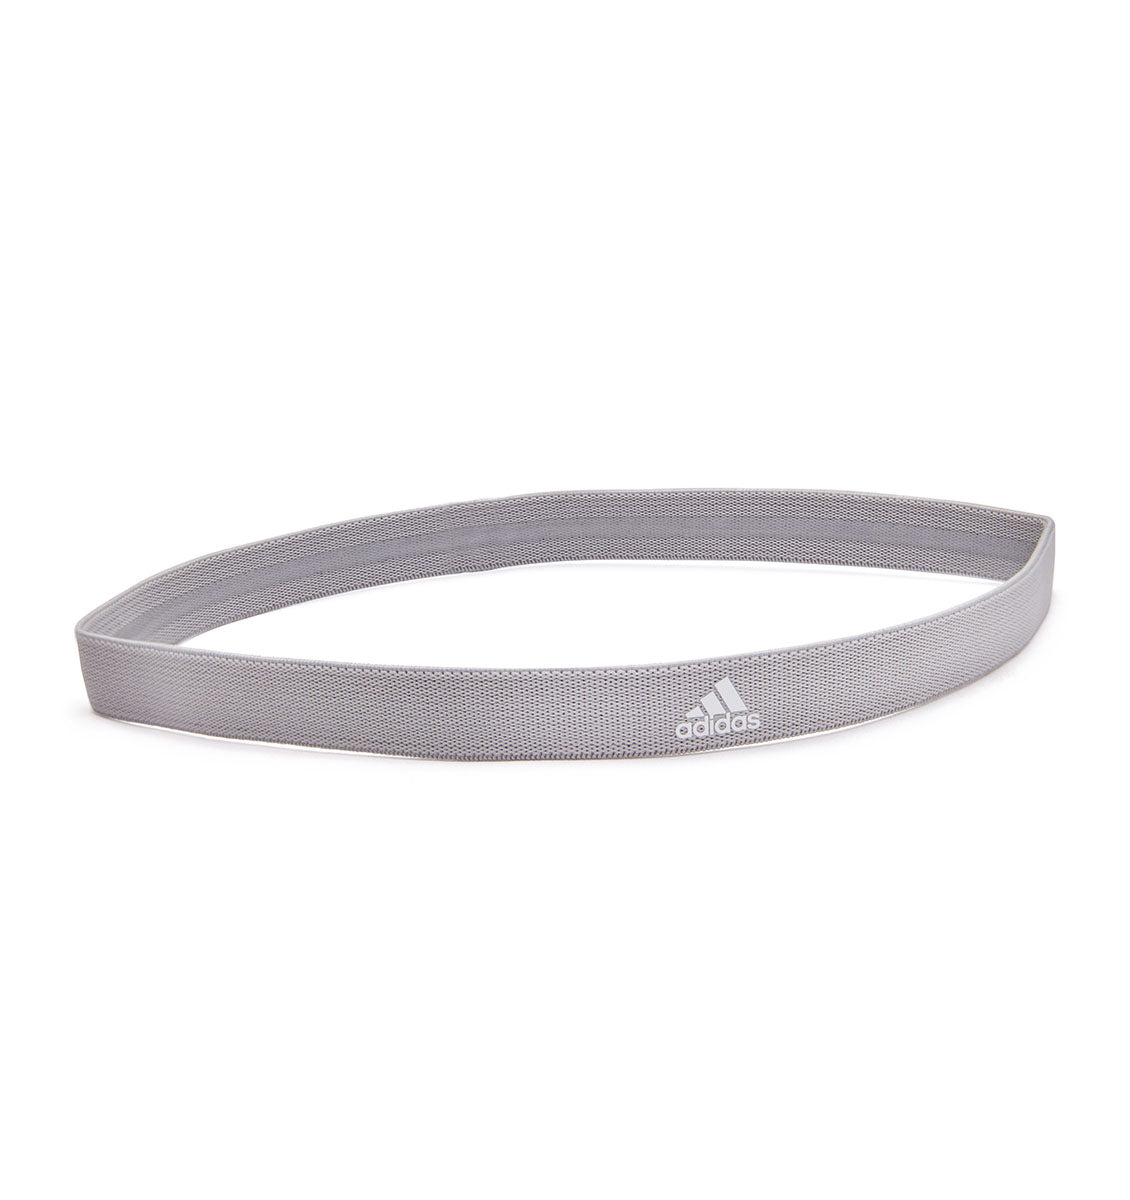 adidas Sports Hair Bands - Grey/Green/Mint (3 Pack) - 2